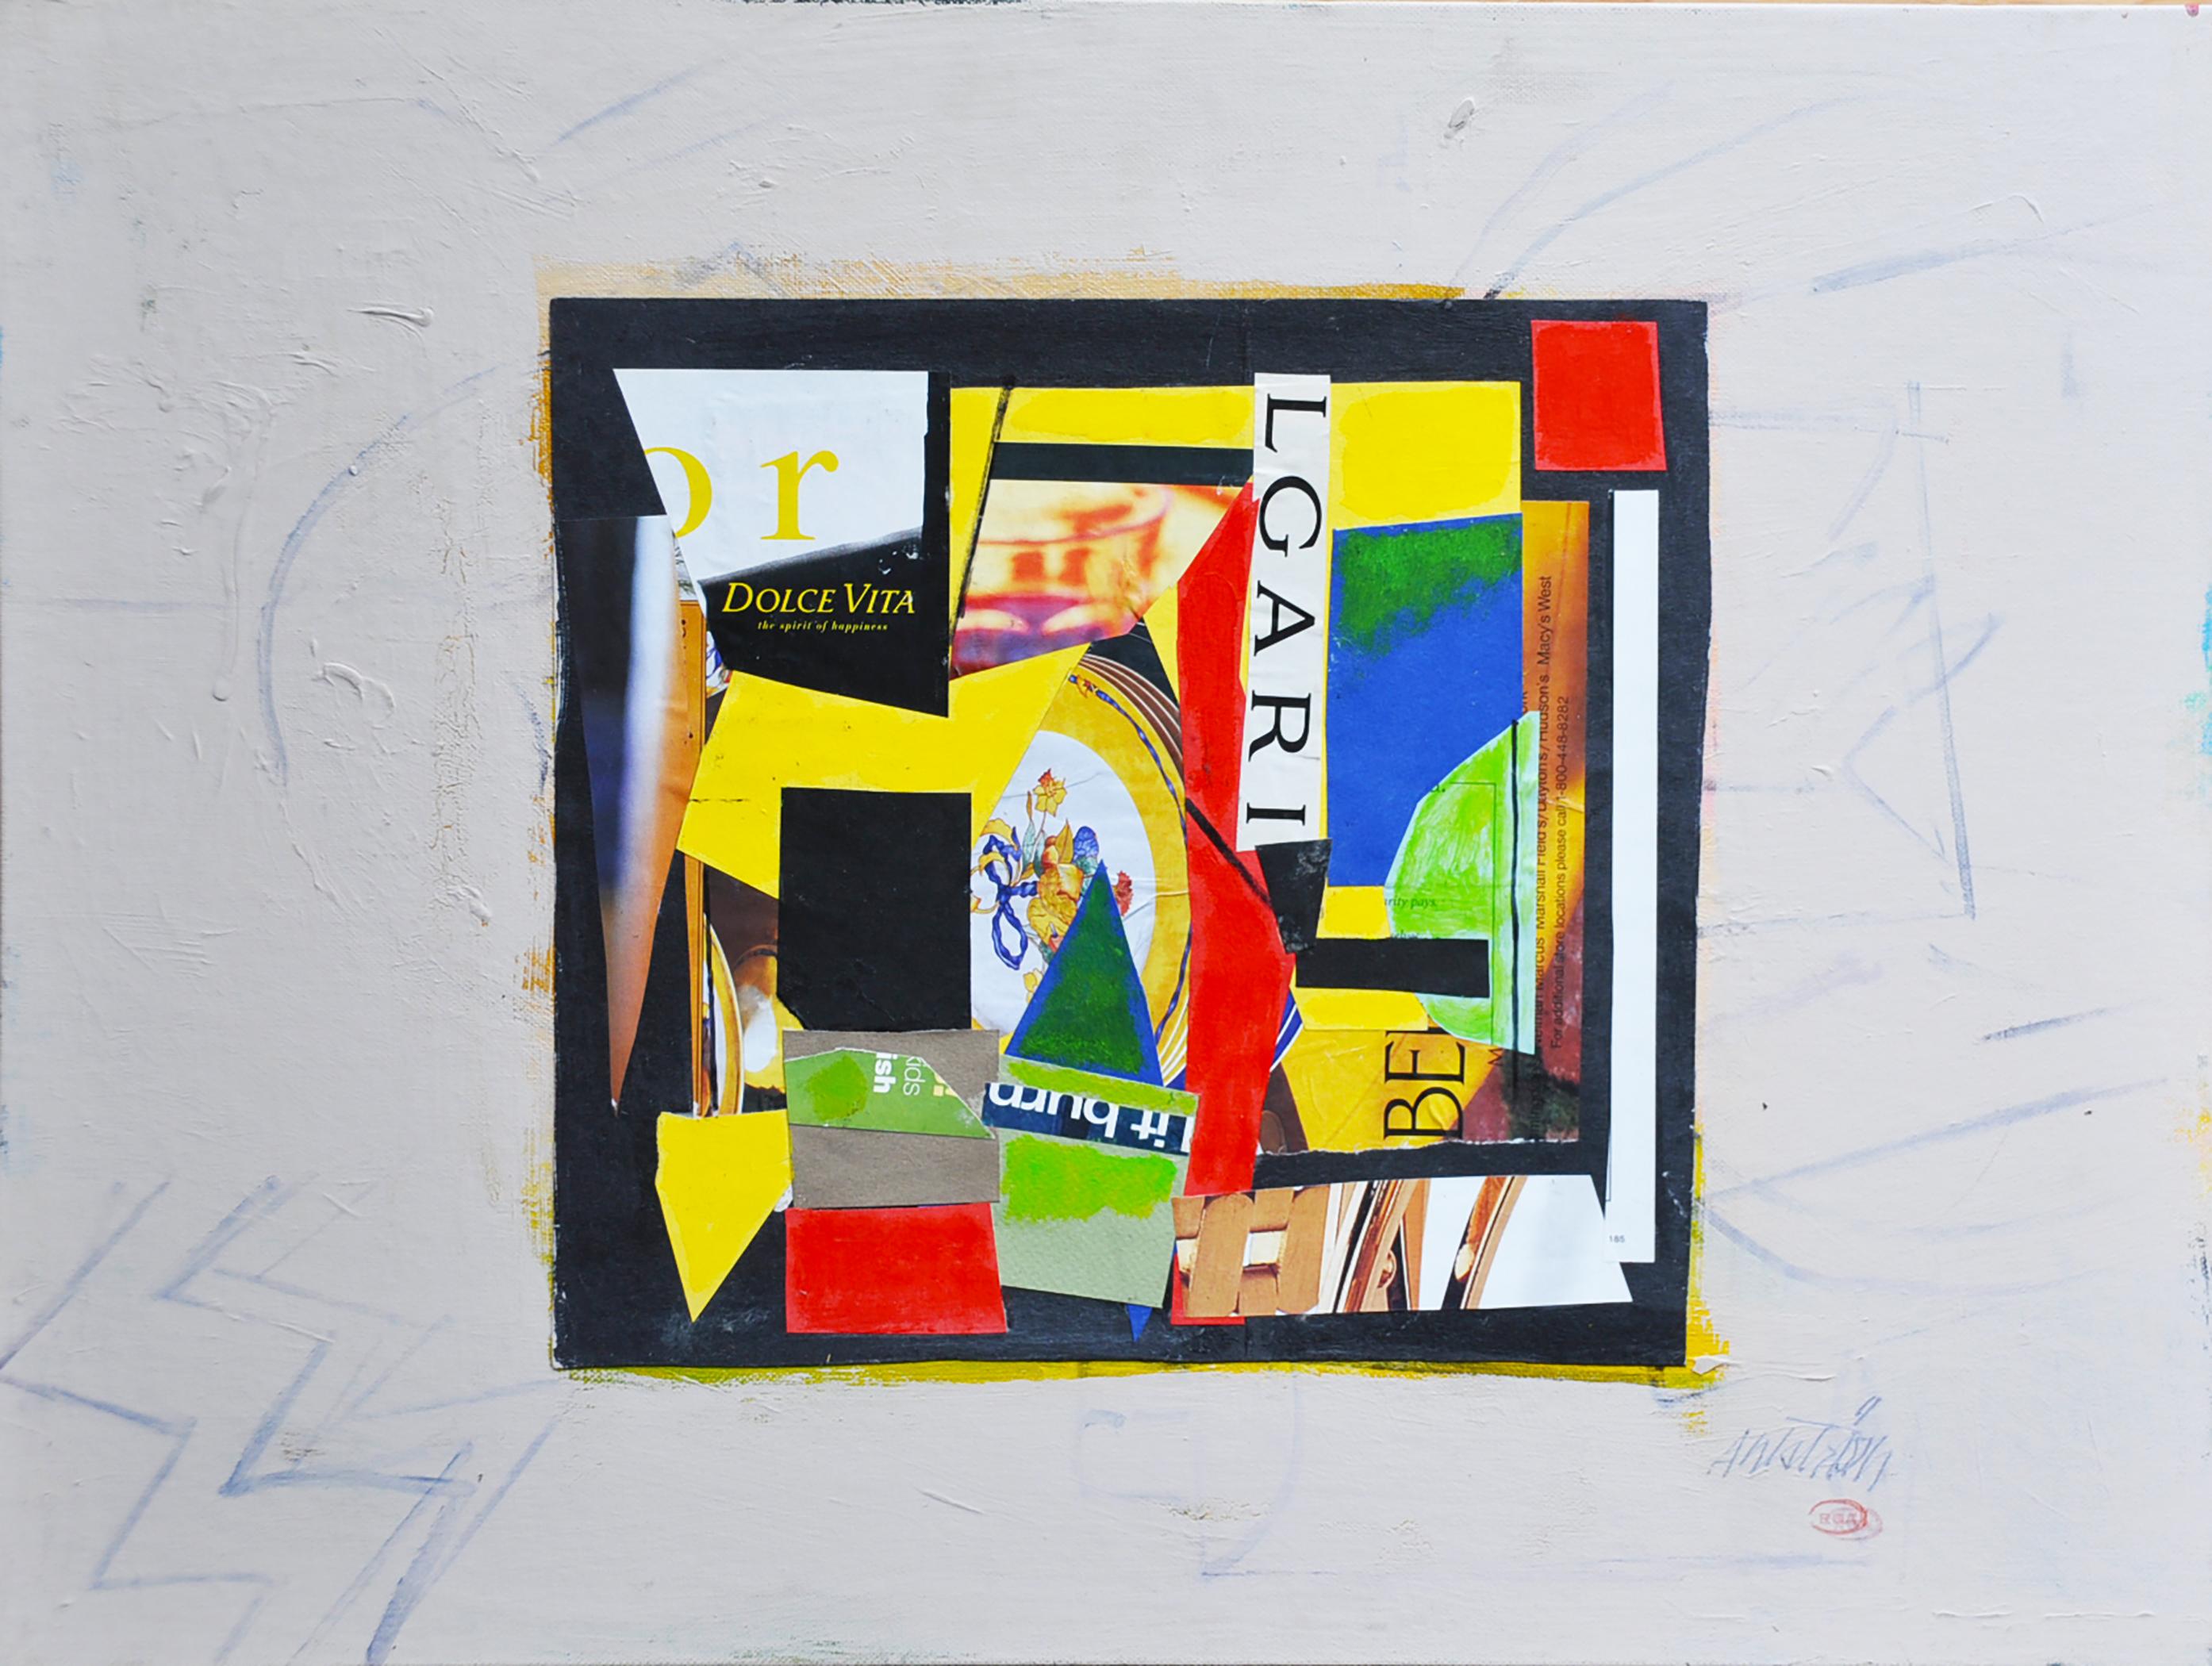 Ronald Ahlstrom "La Dolce Vita", mixed media collage on canvas board